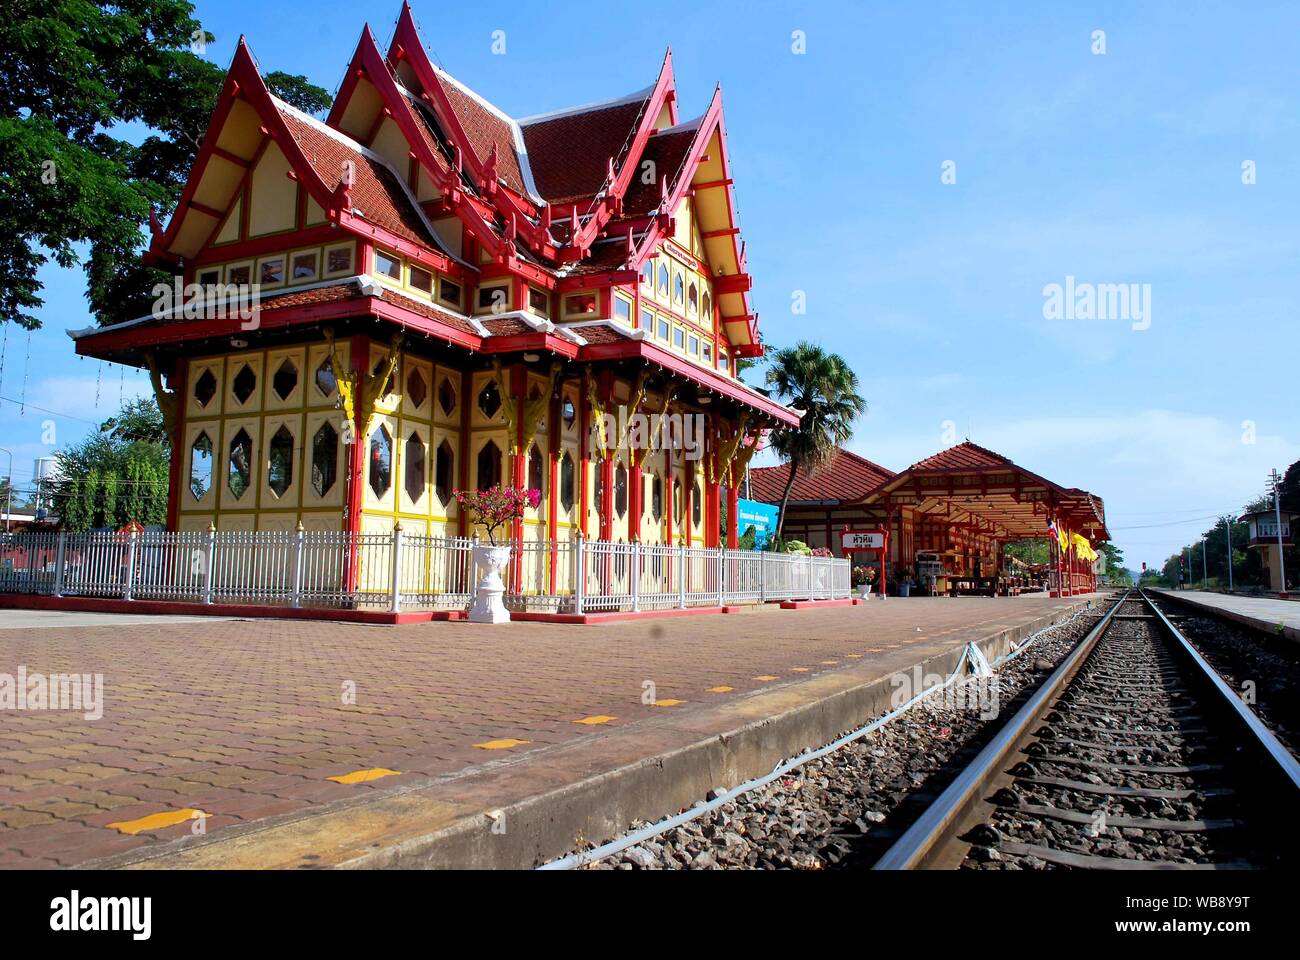 The Hua Hin Railway Council, Thailand Tourism Authority Stock Photo